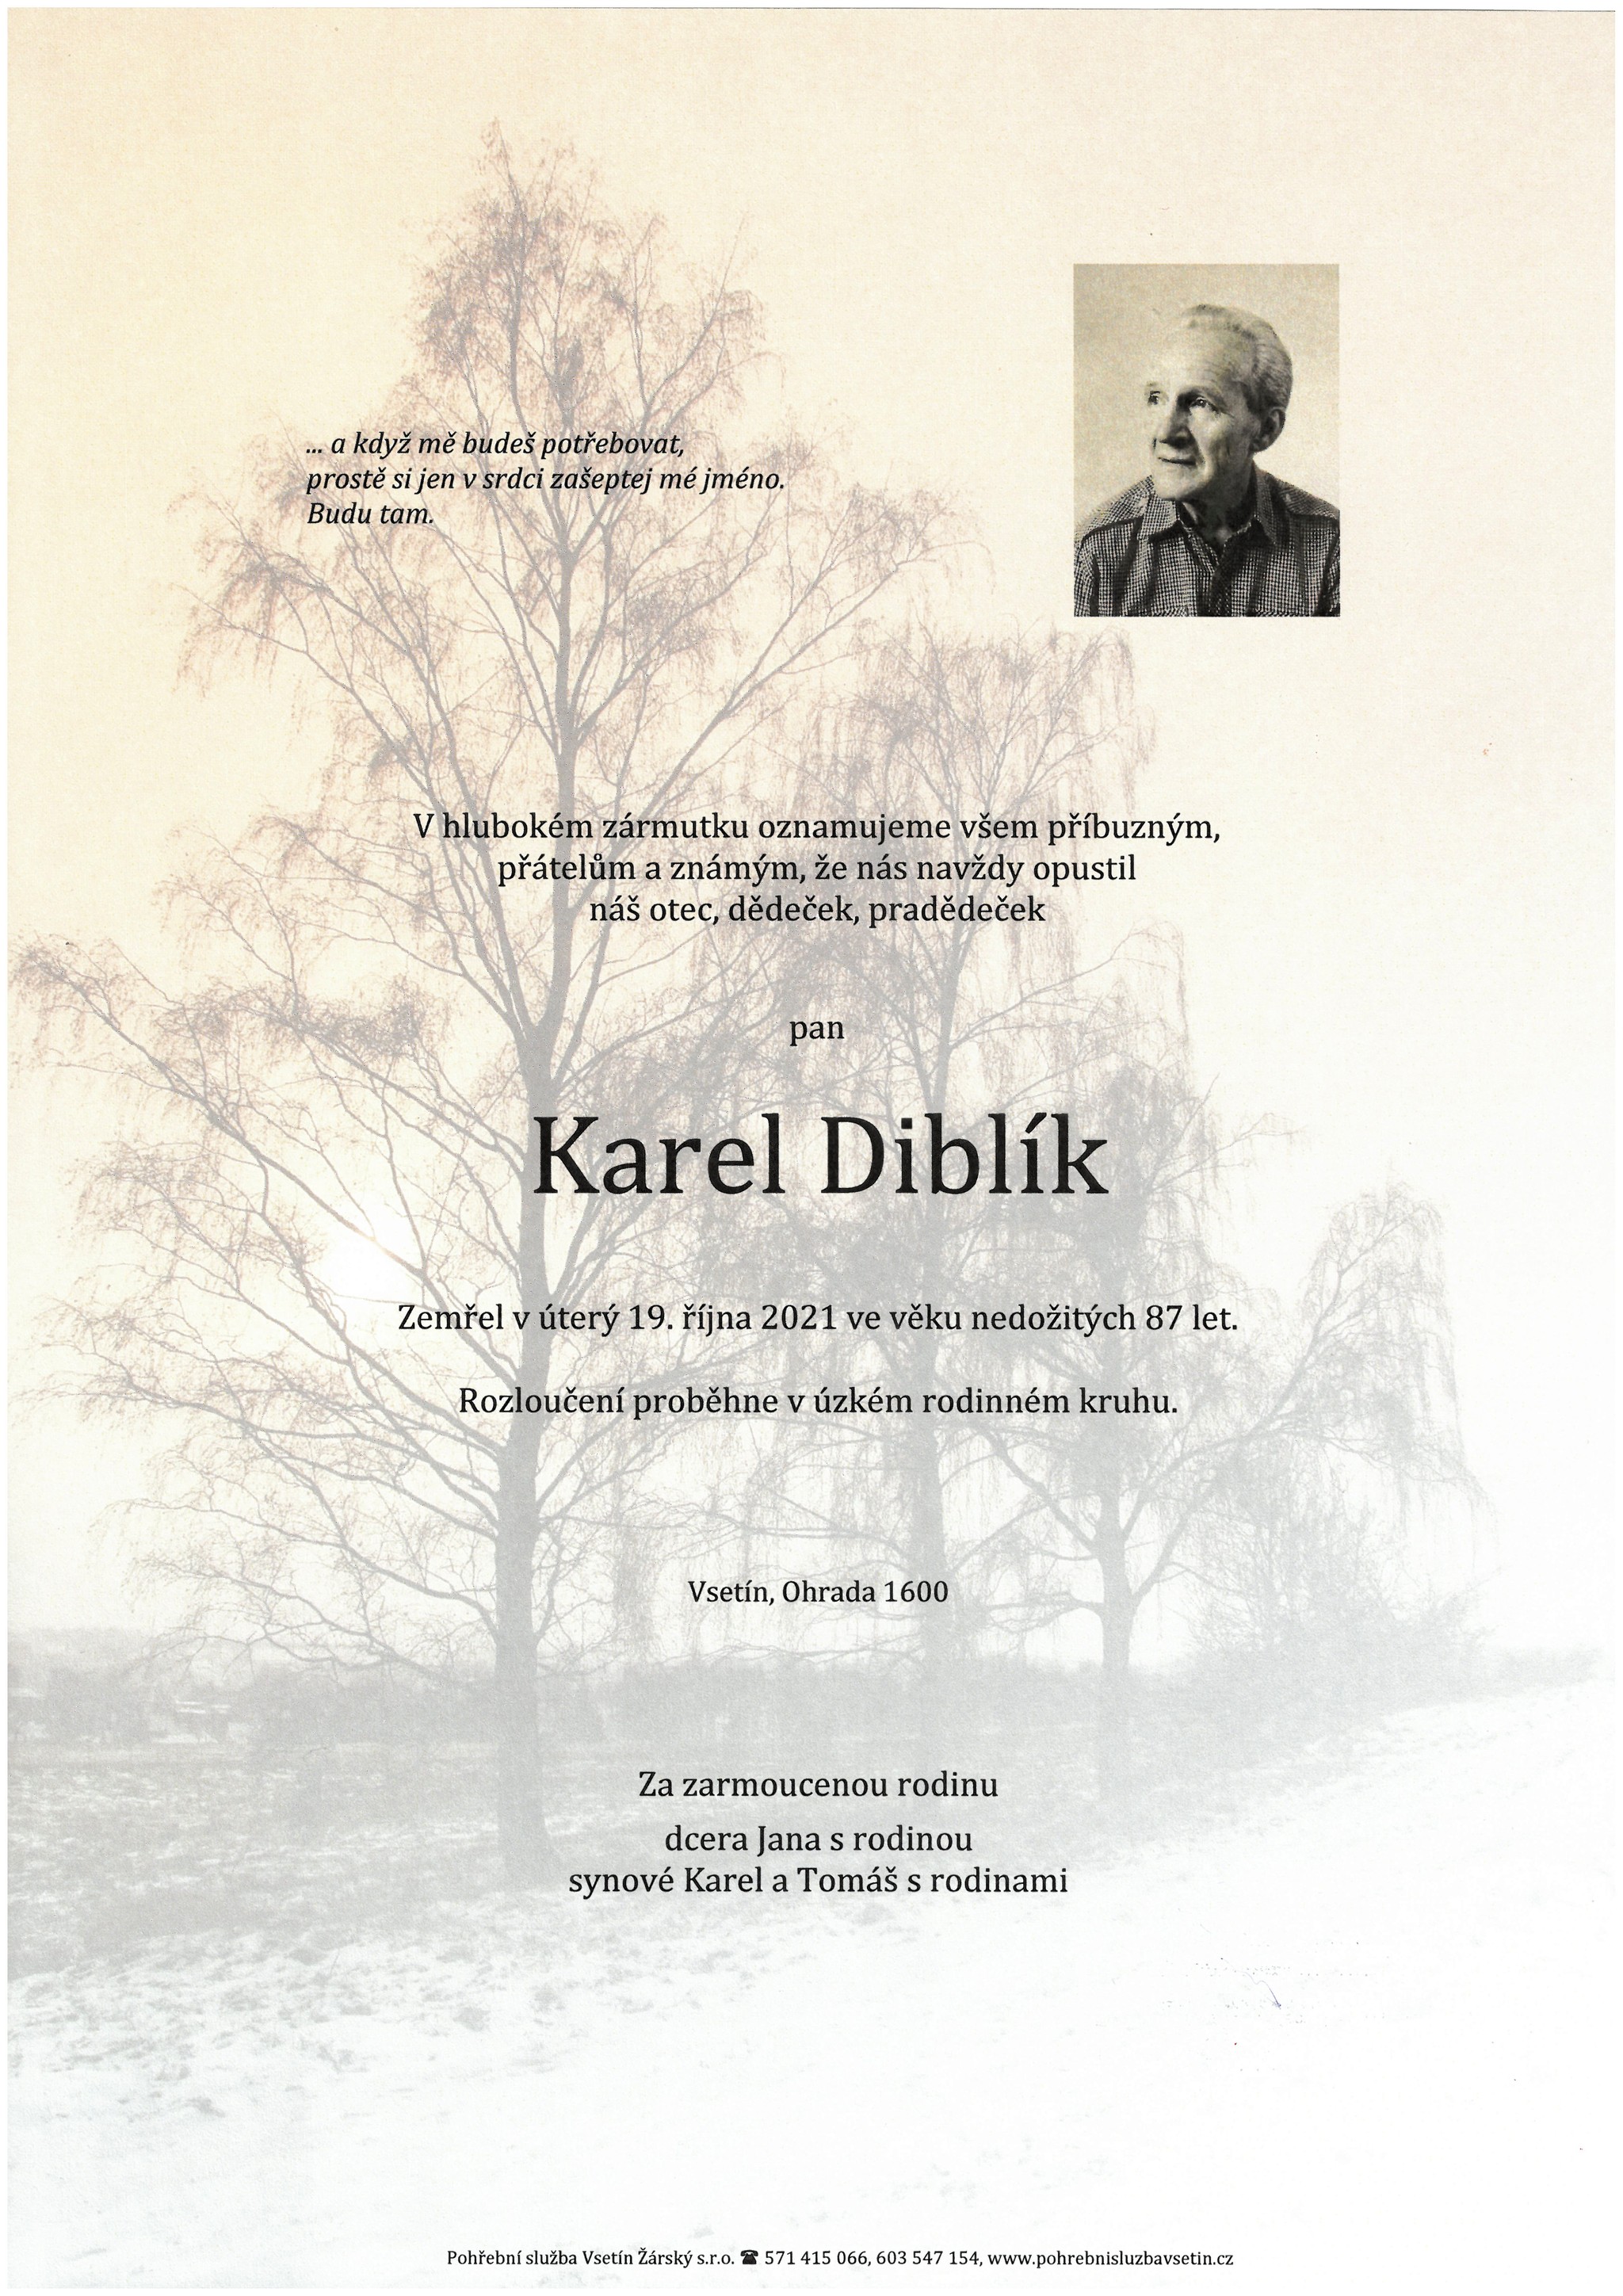 Karel Diblík